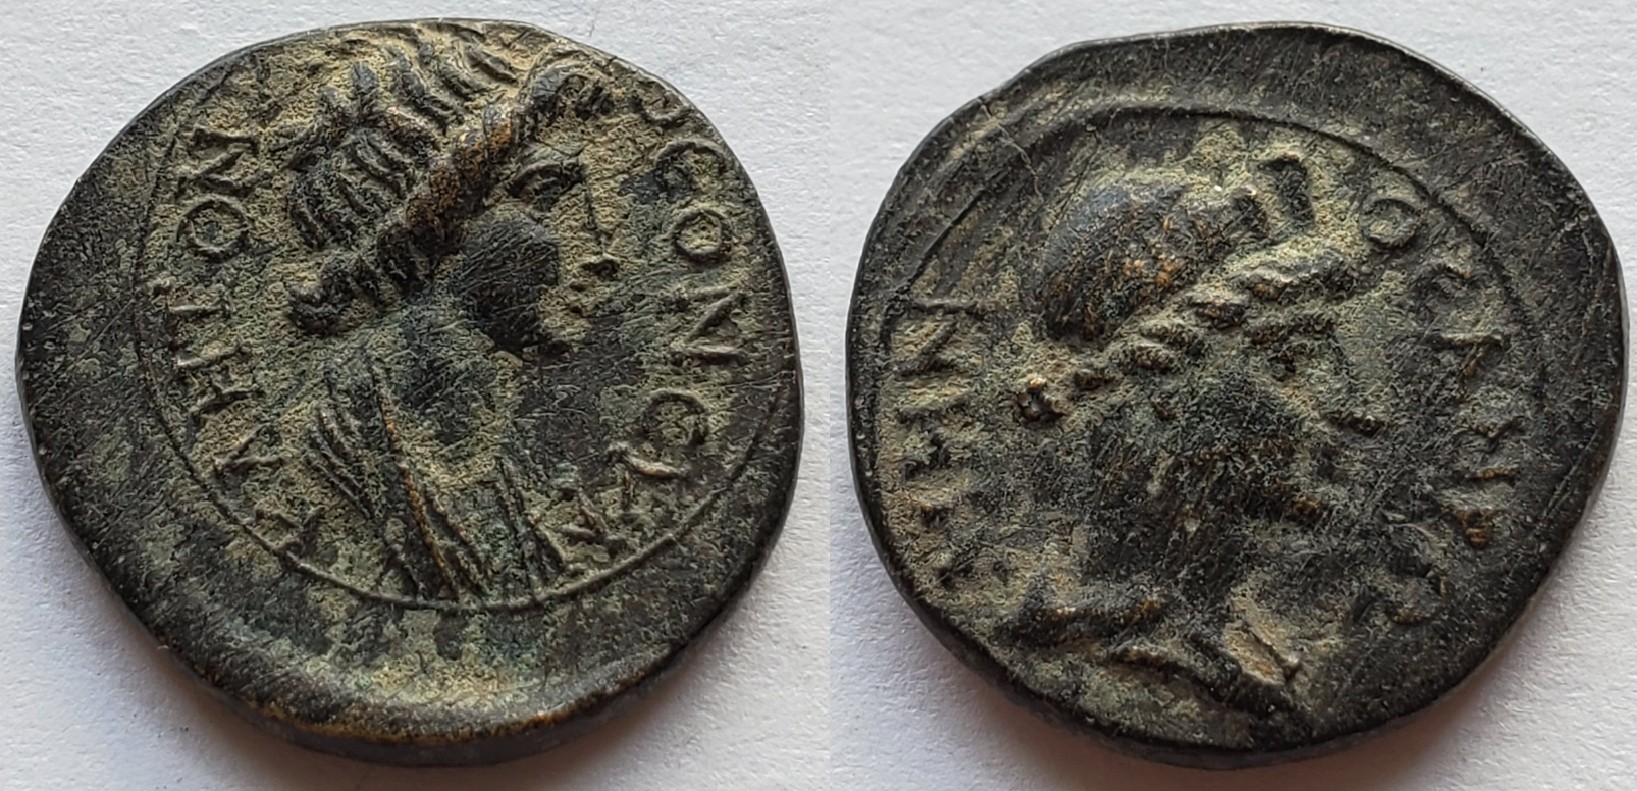 Pergamon mysia AE bust Senate roma.jpg